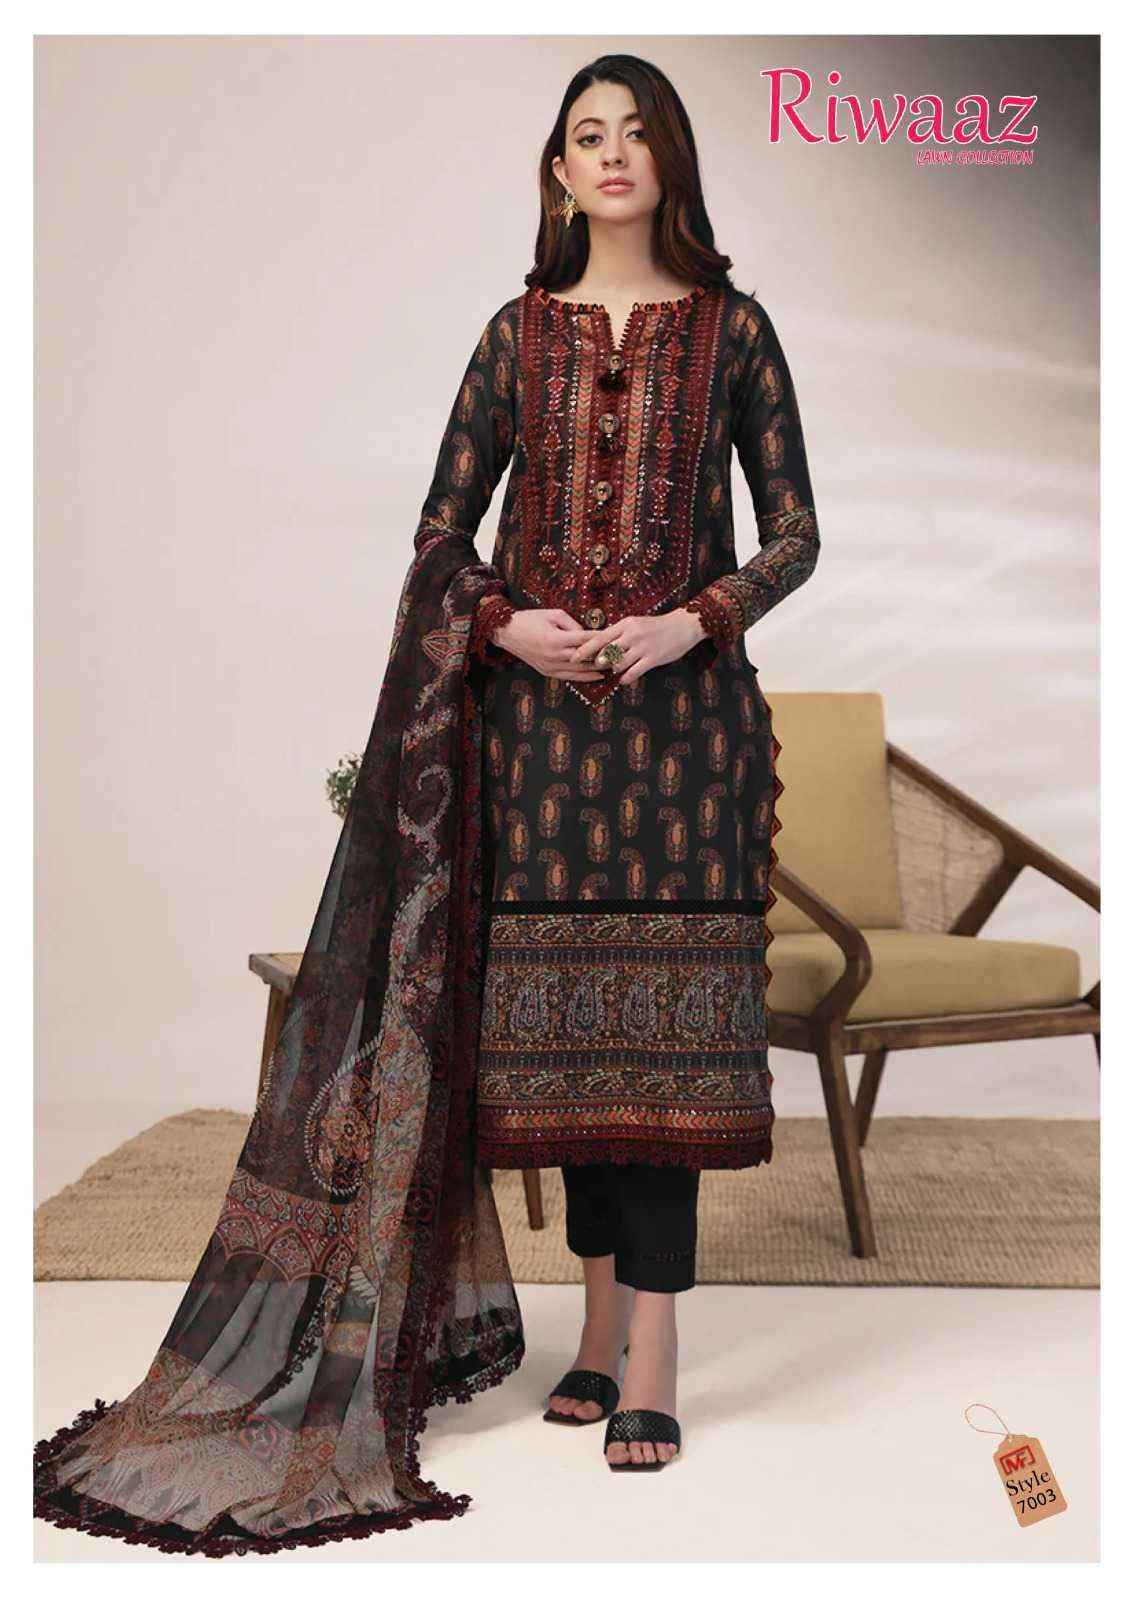 Madhav Fashion Riwaaz Vol 7 Lawn Cotton Dress Material 6 pcs